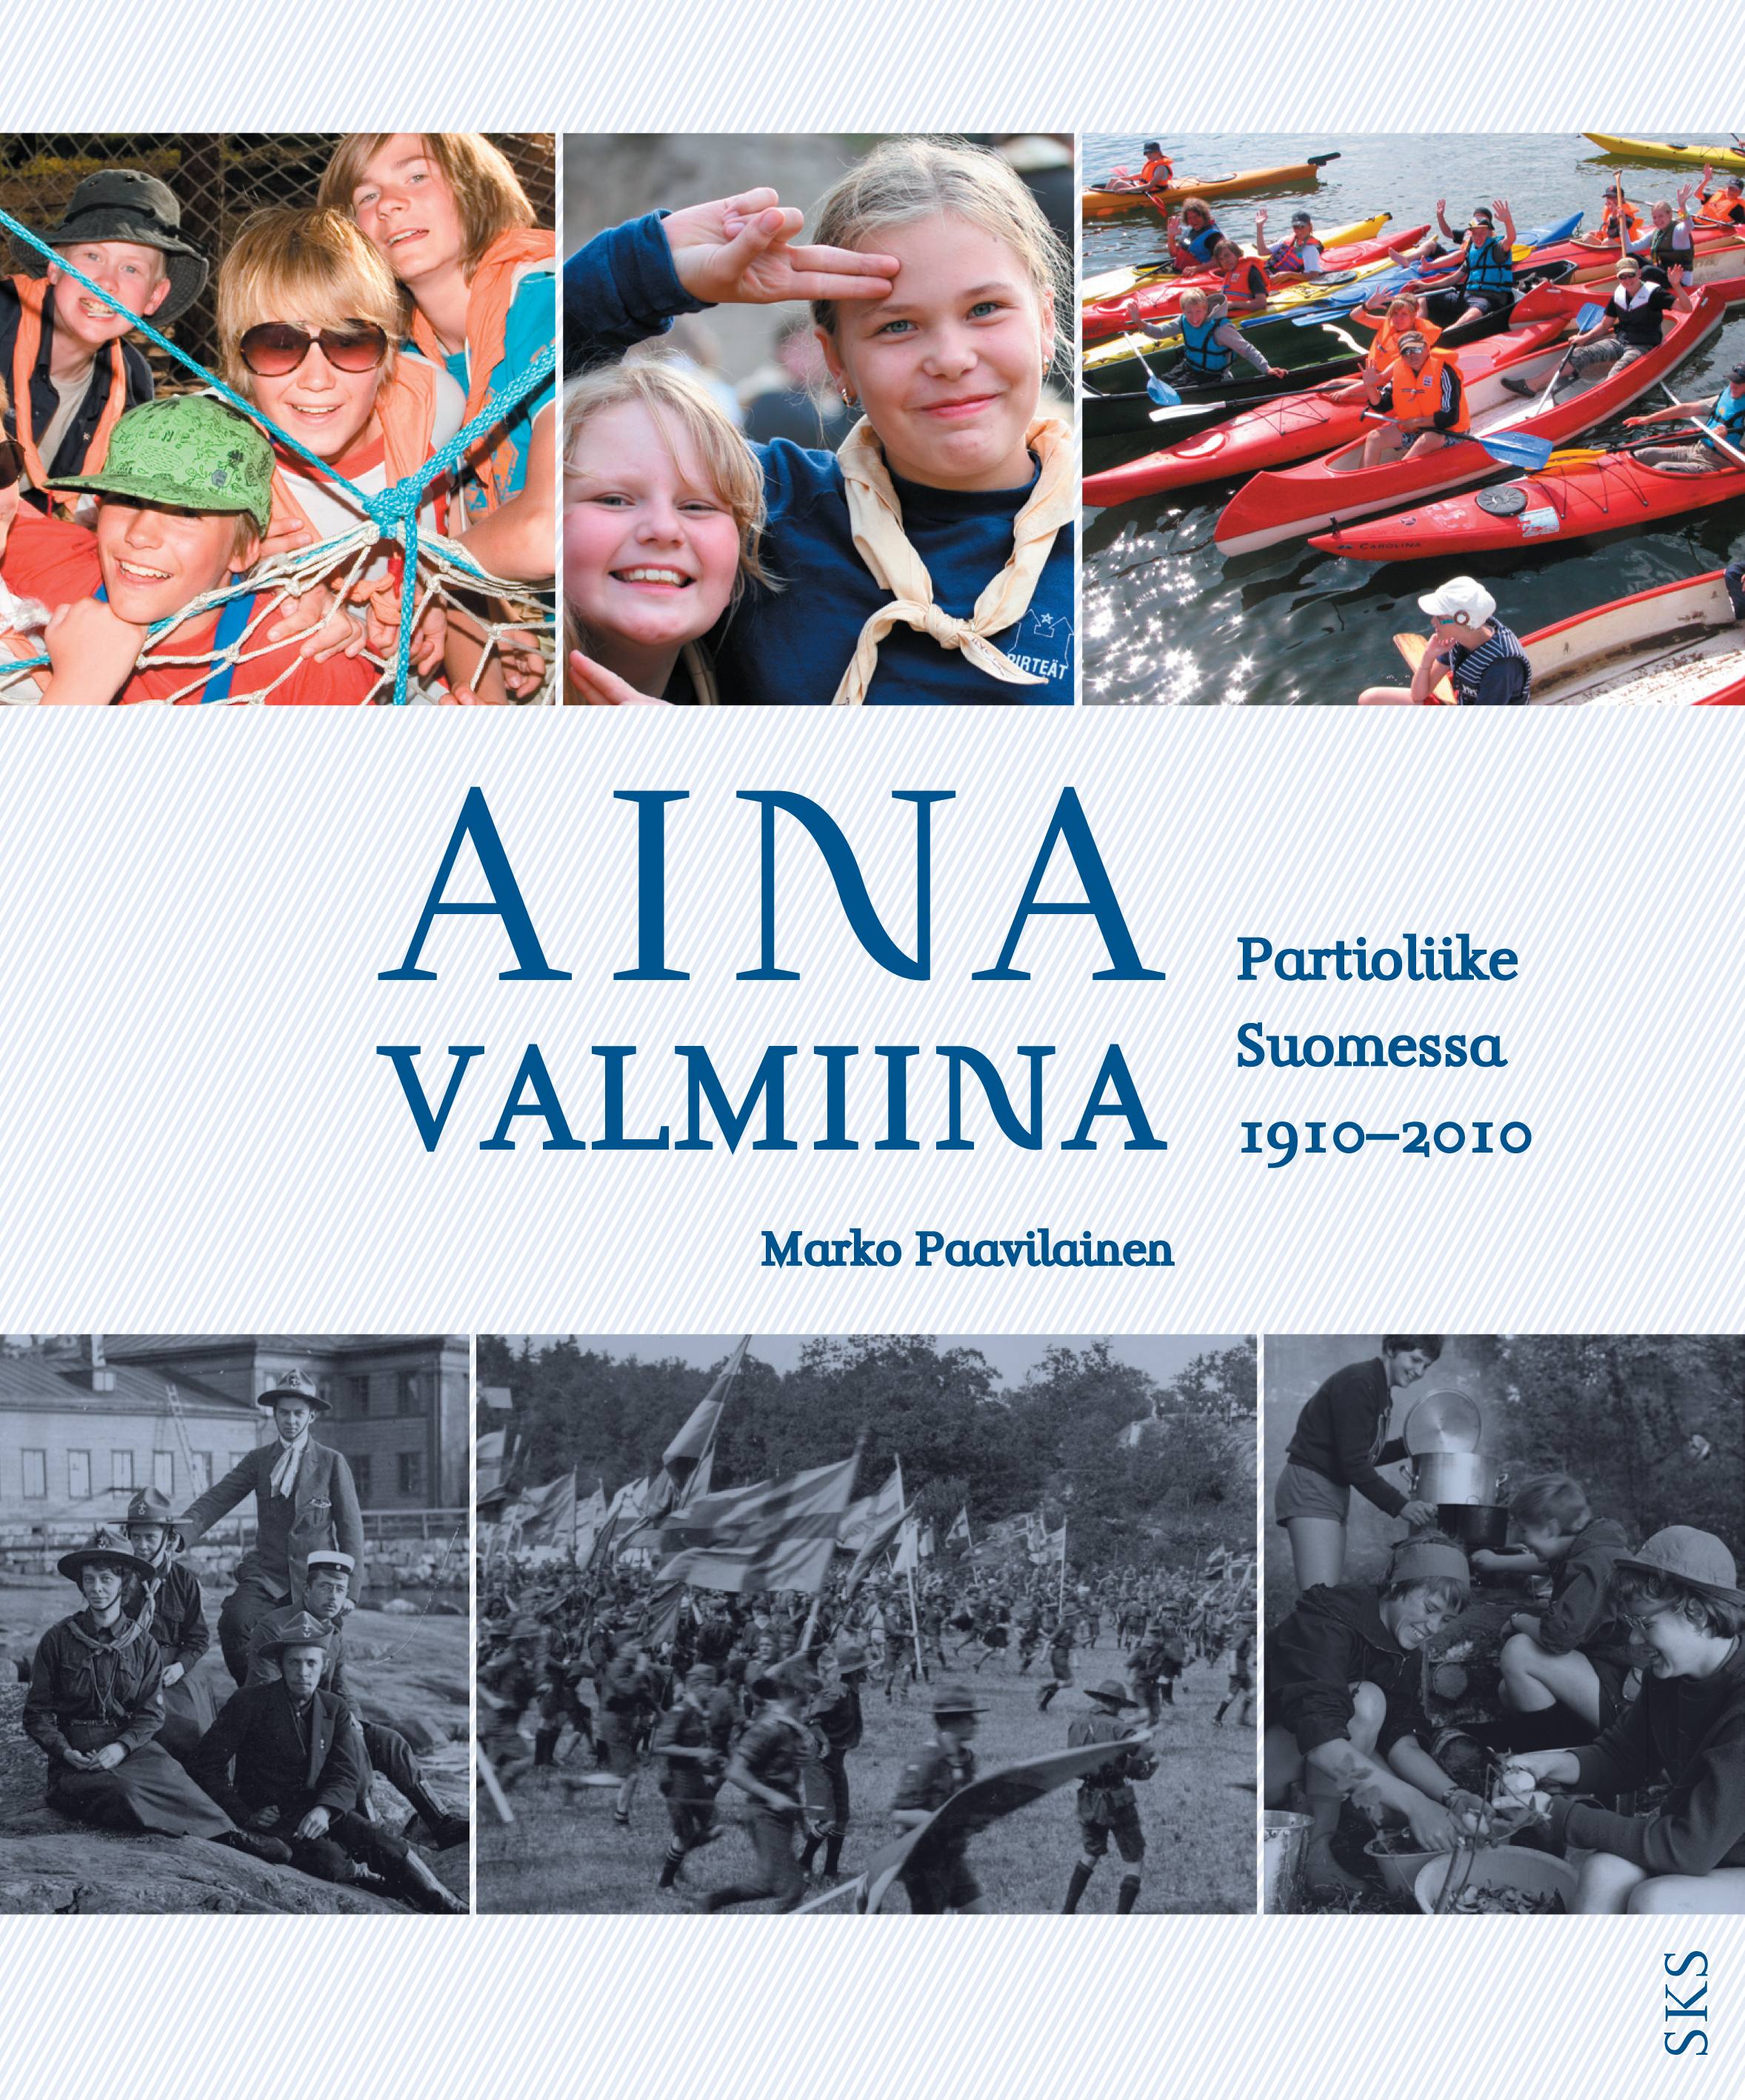 Partiotuote Aina Valmiina – Partioliike Suomessa 1910-2010